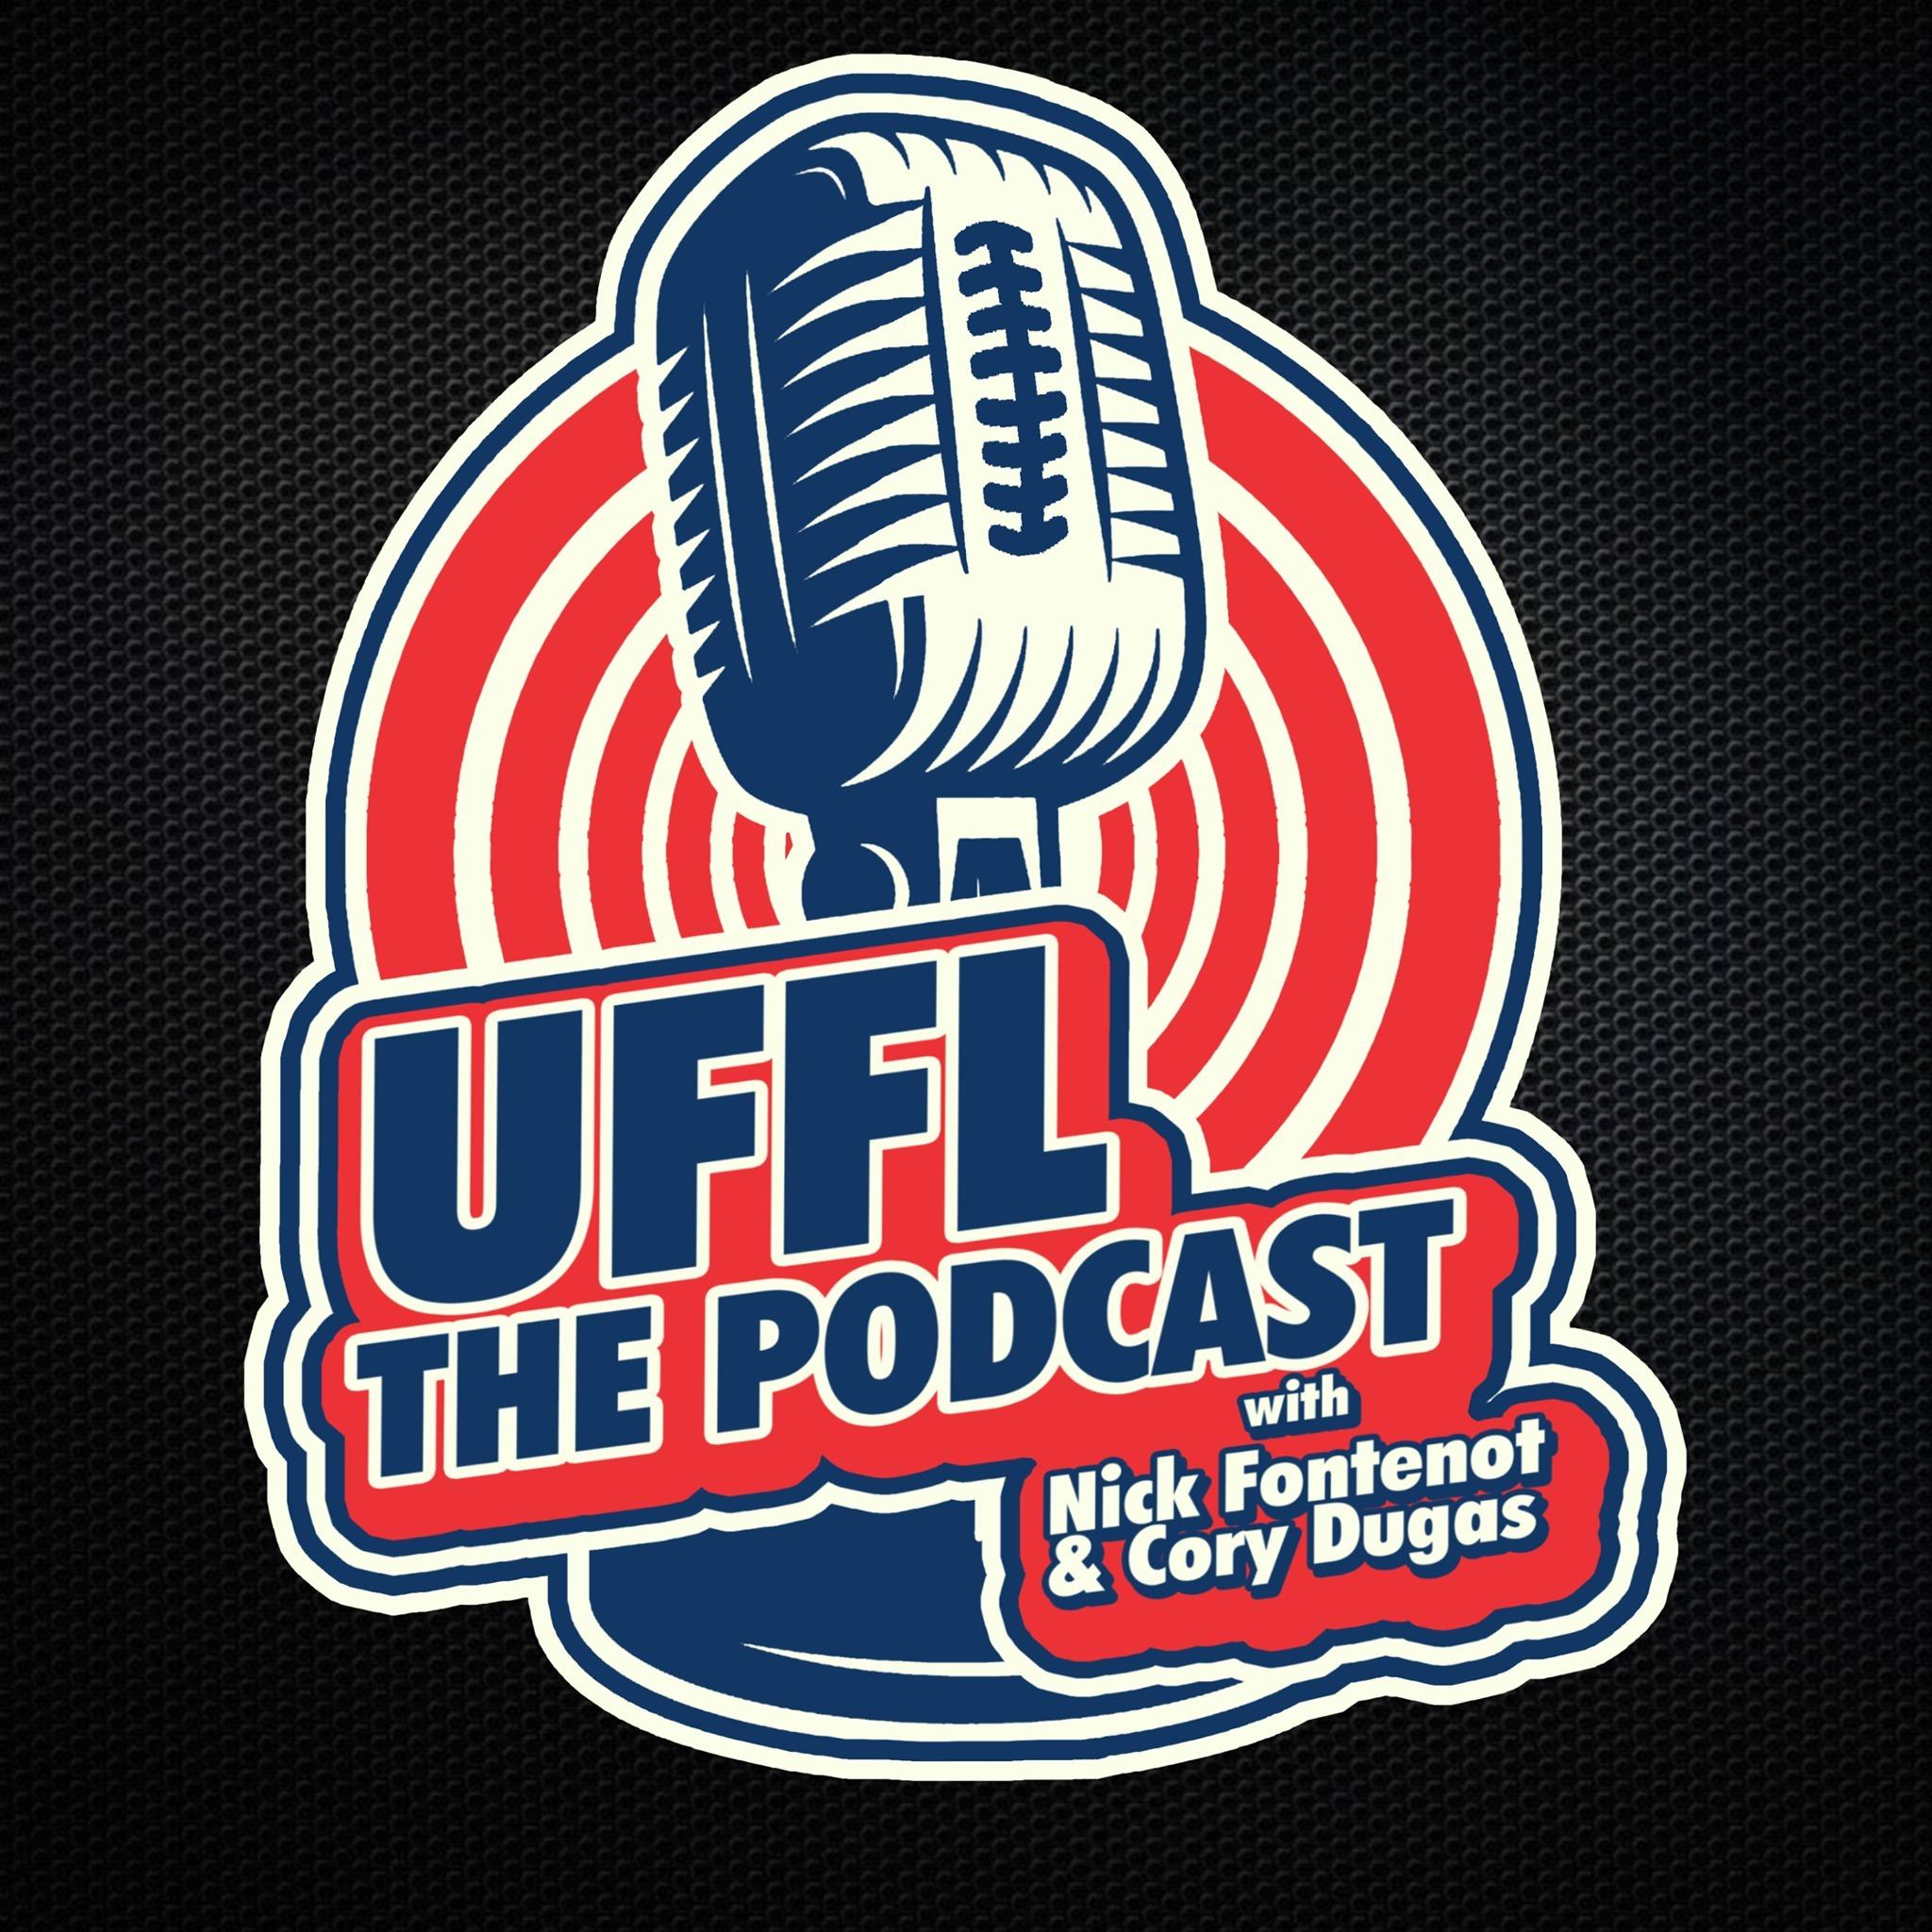 UFFL The Podcast